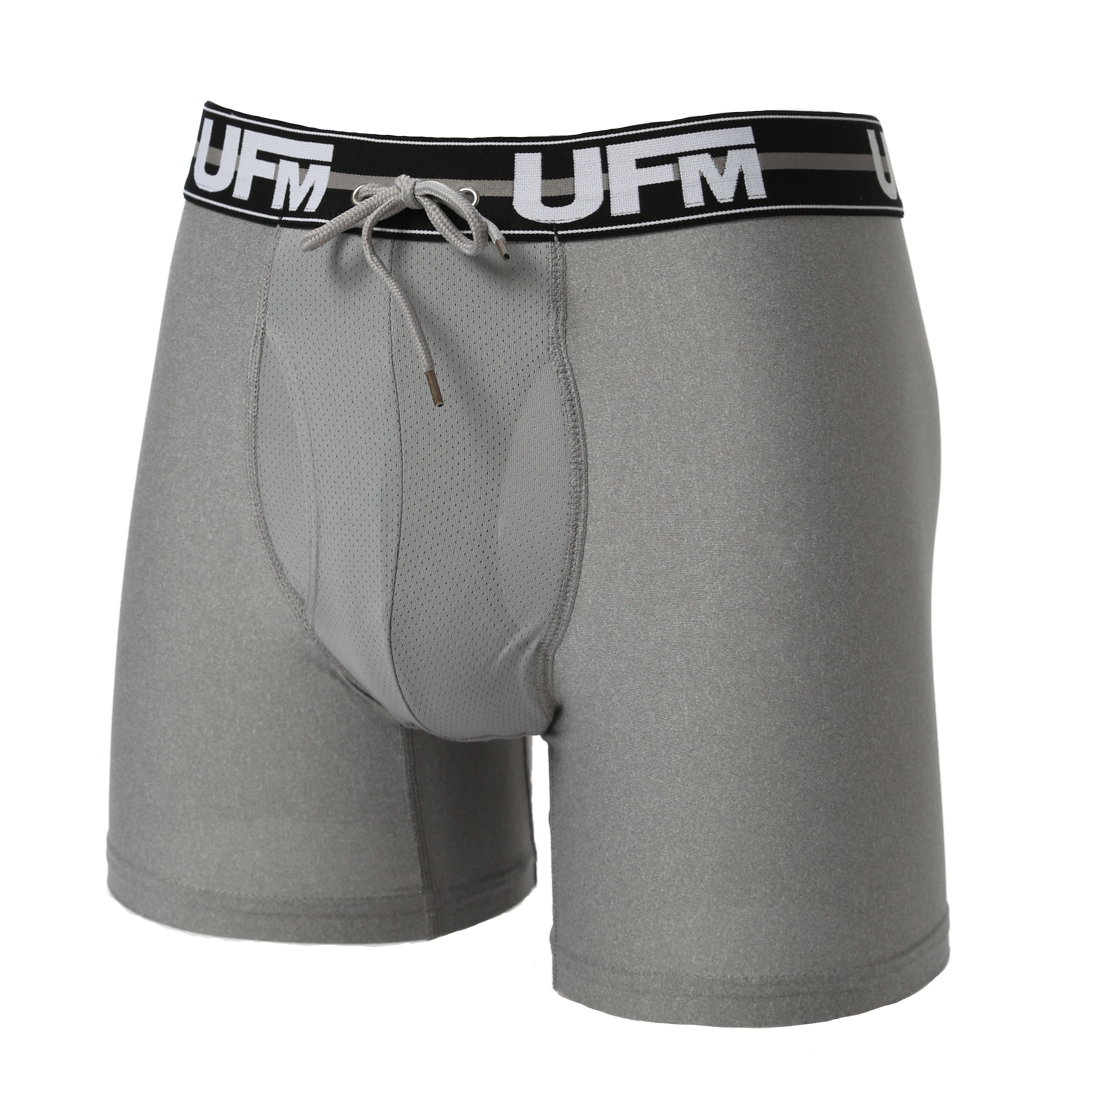 Parent UFM Underwear for Men Medical Polyester 6 inch Original Max Boxer Brief Gray 800